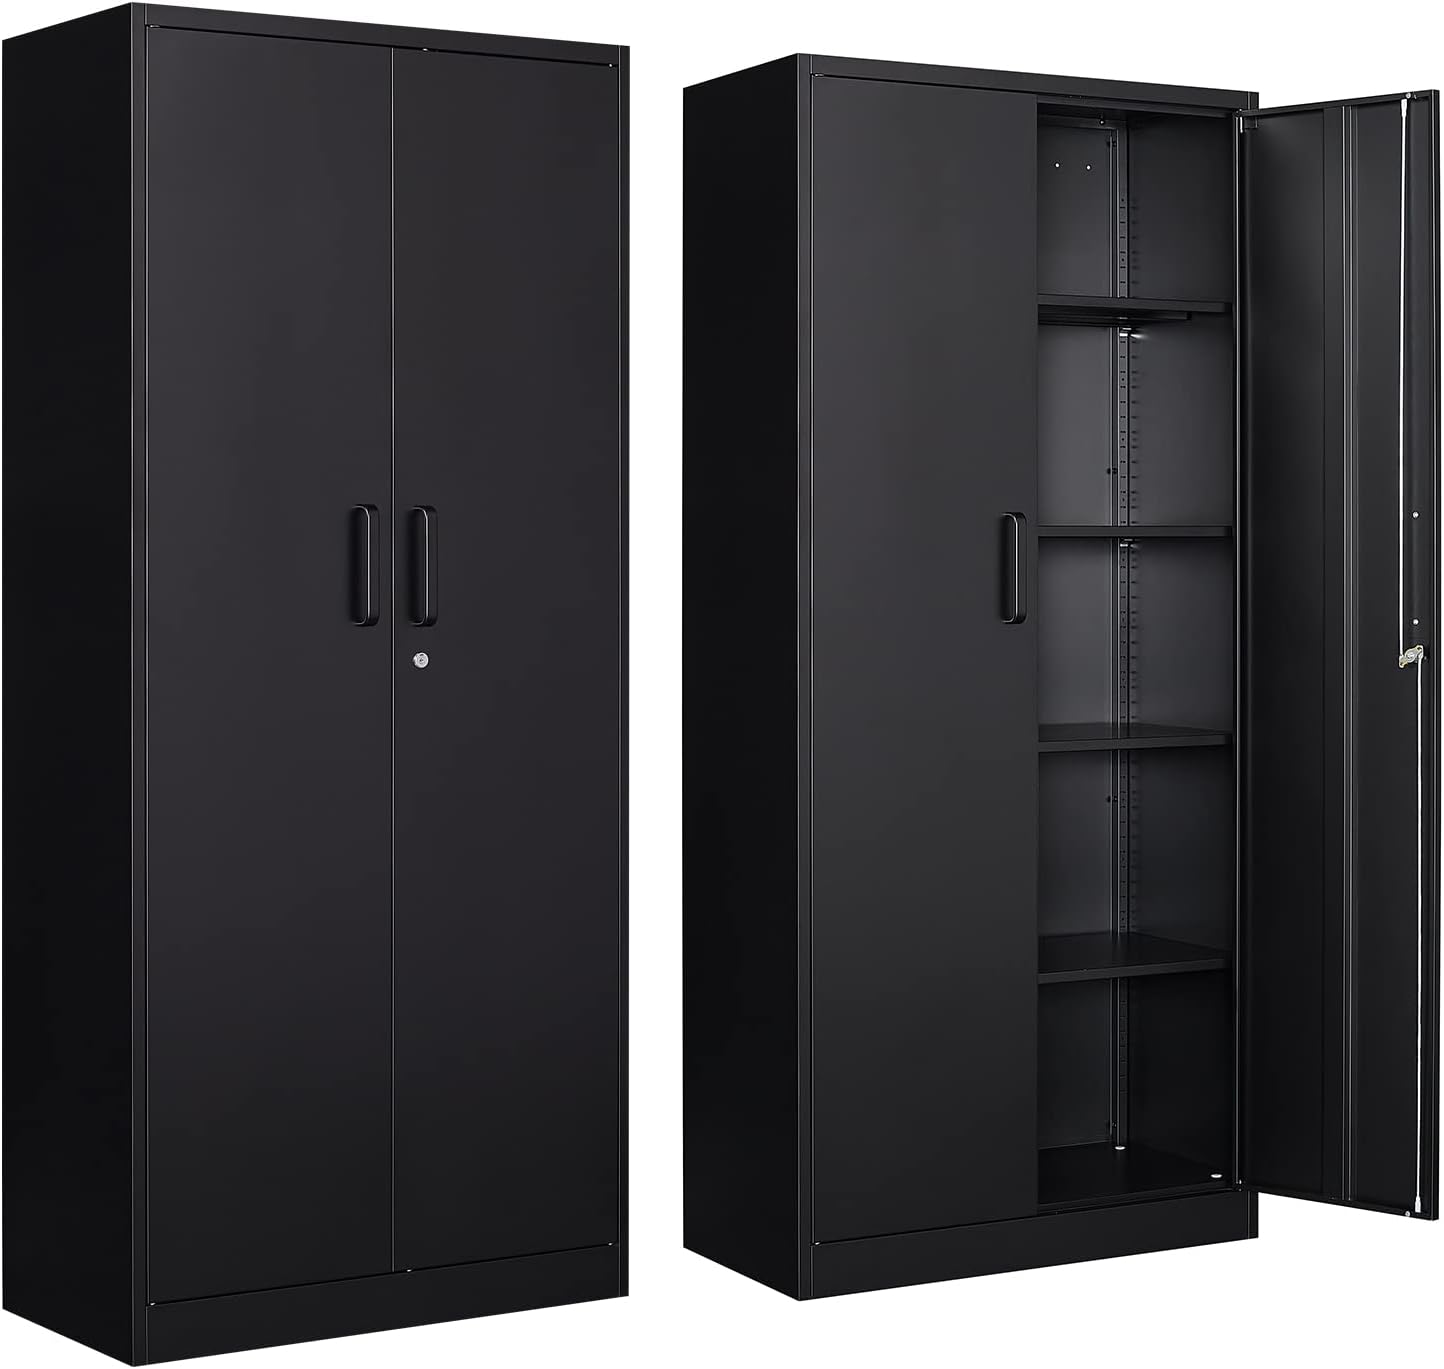 Yizosh Metal Garage Storage Cabinet with 2 Doors and 4 [...]